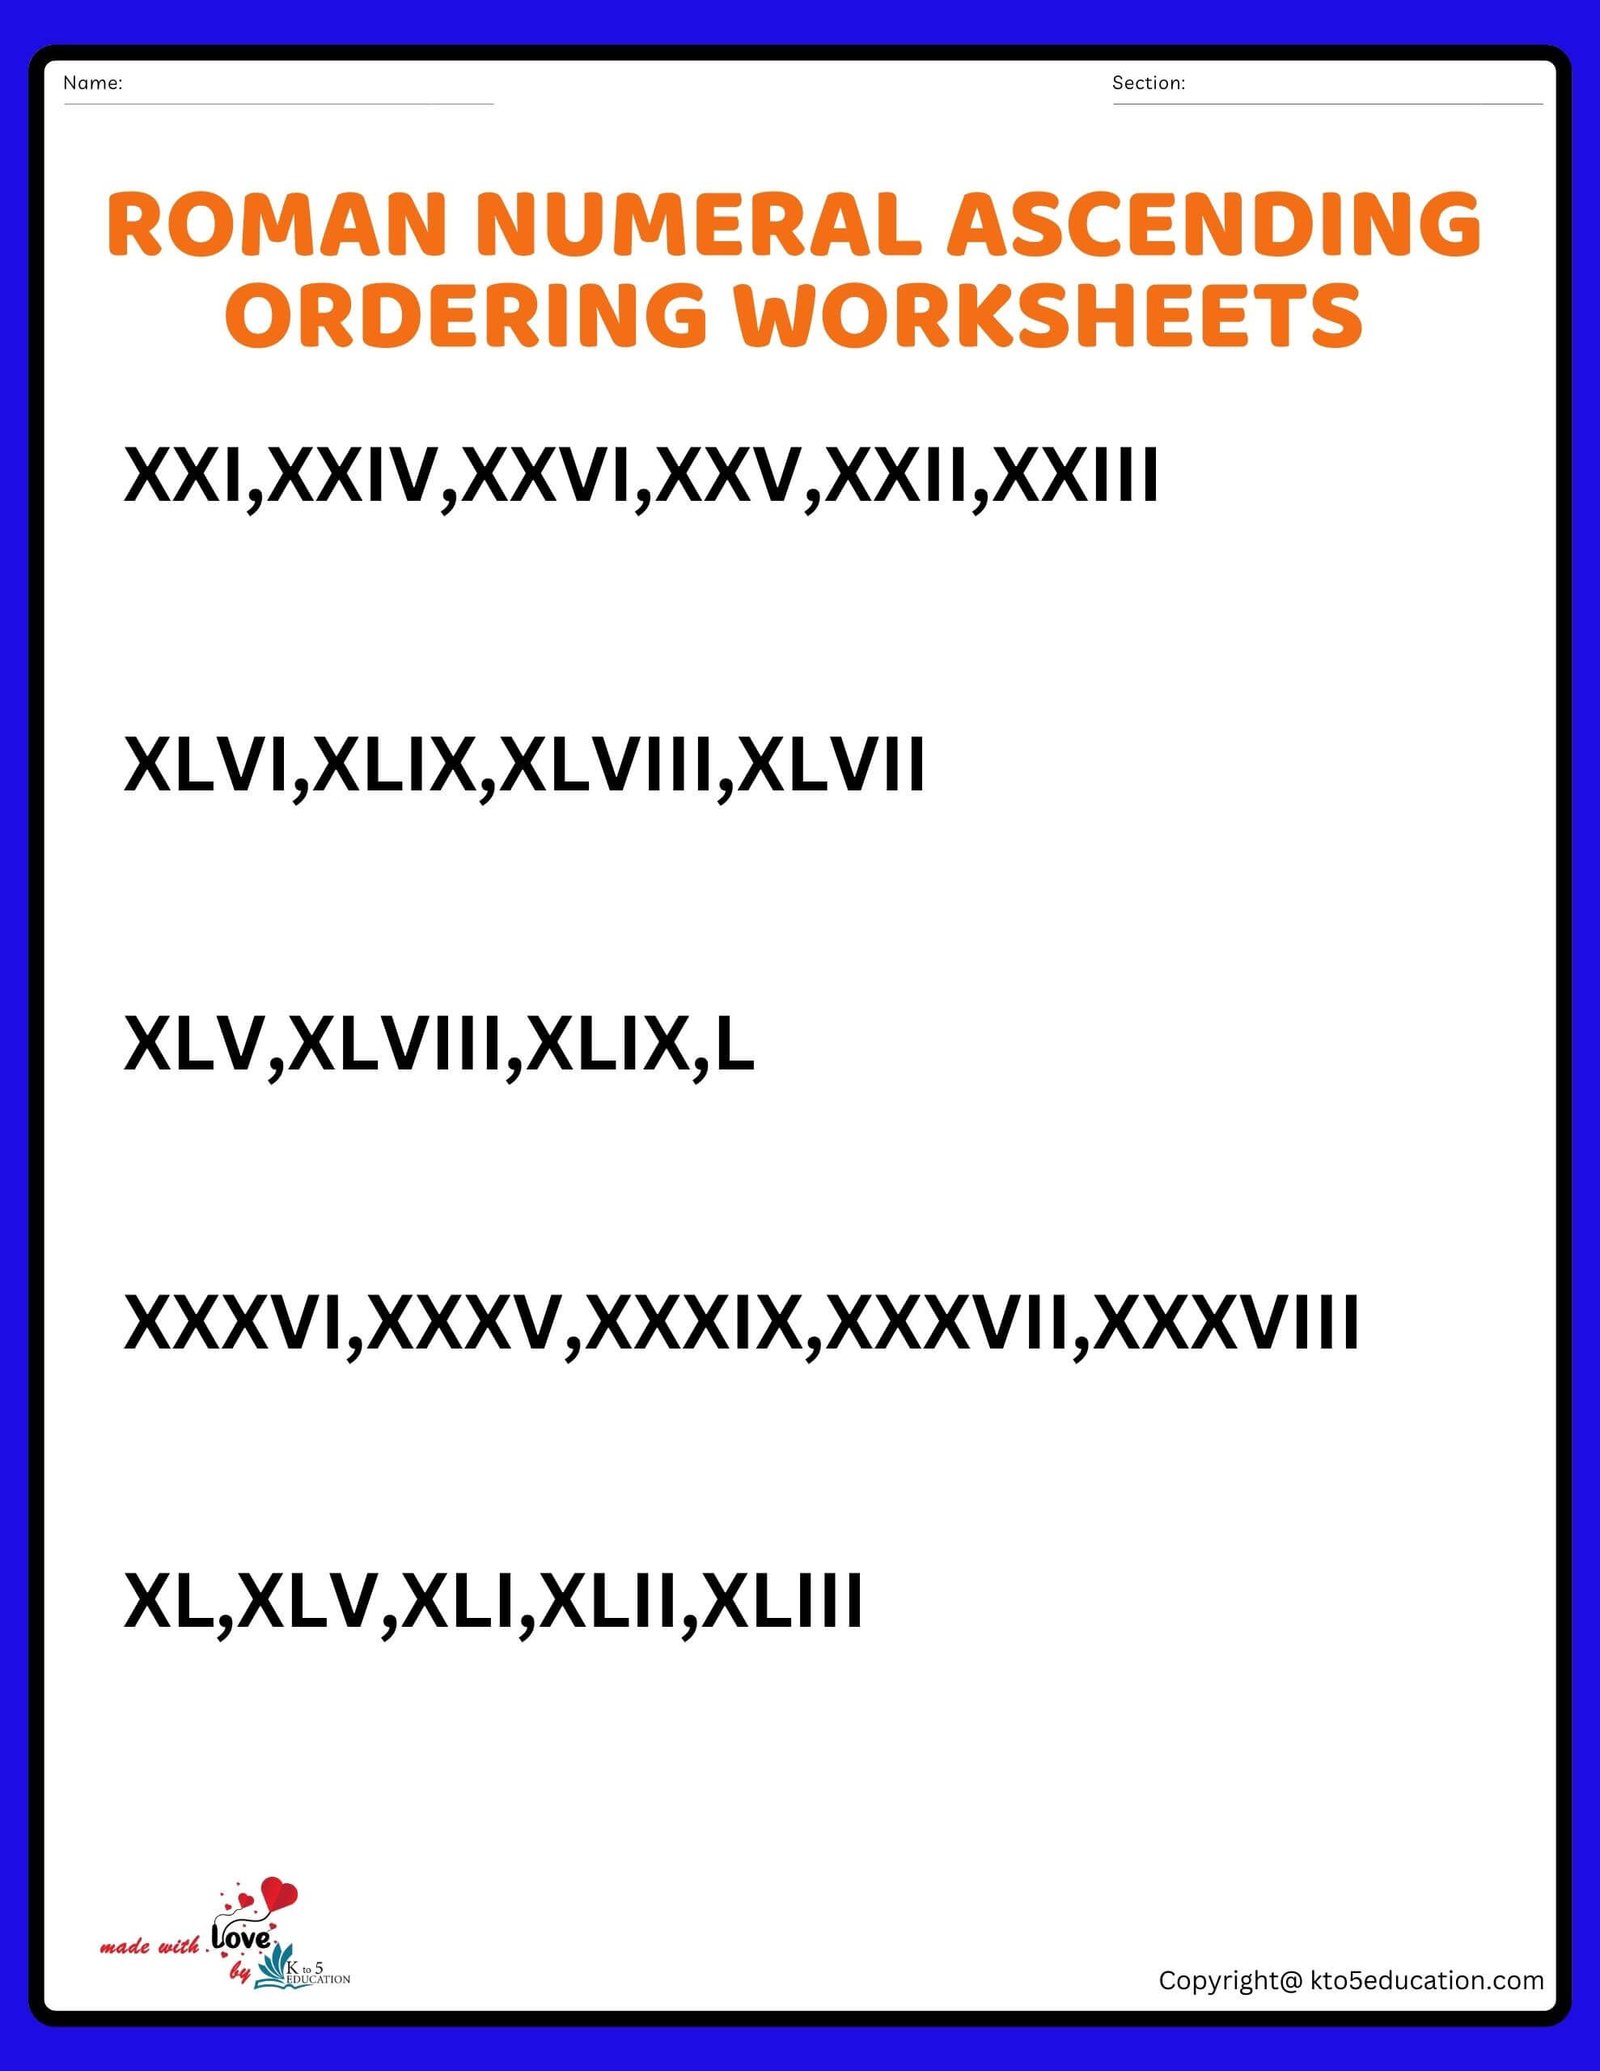 Roman Numeral Ascending Ordering Worksheet Grade 6 1 TO 50